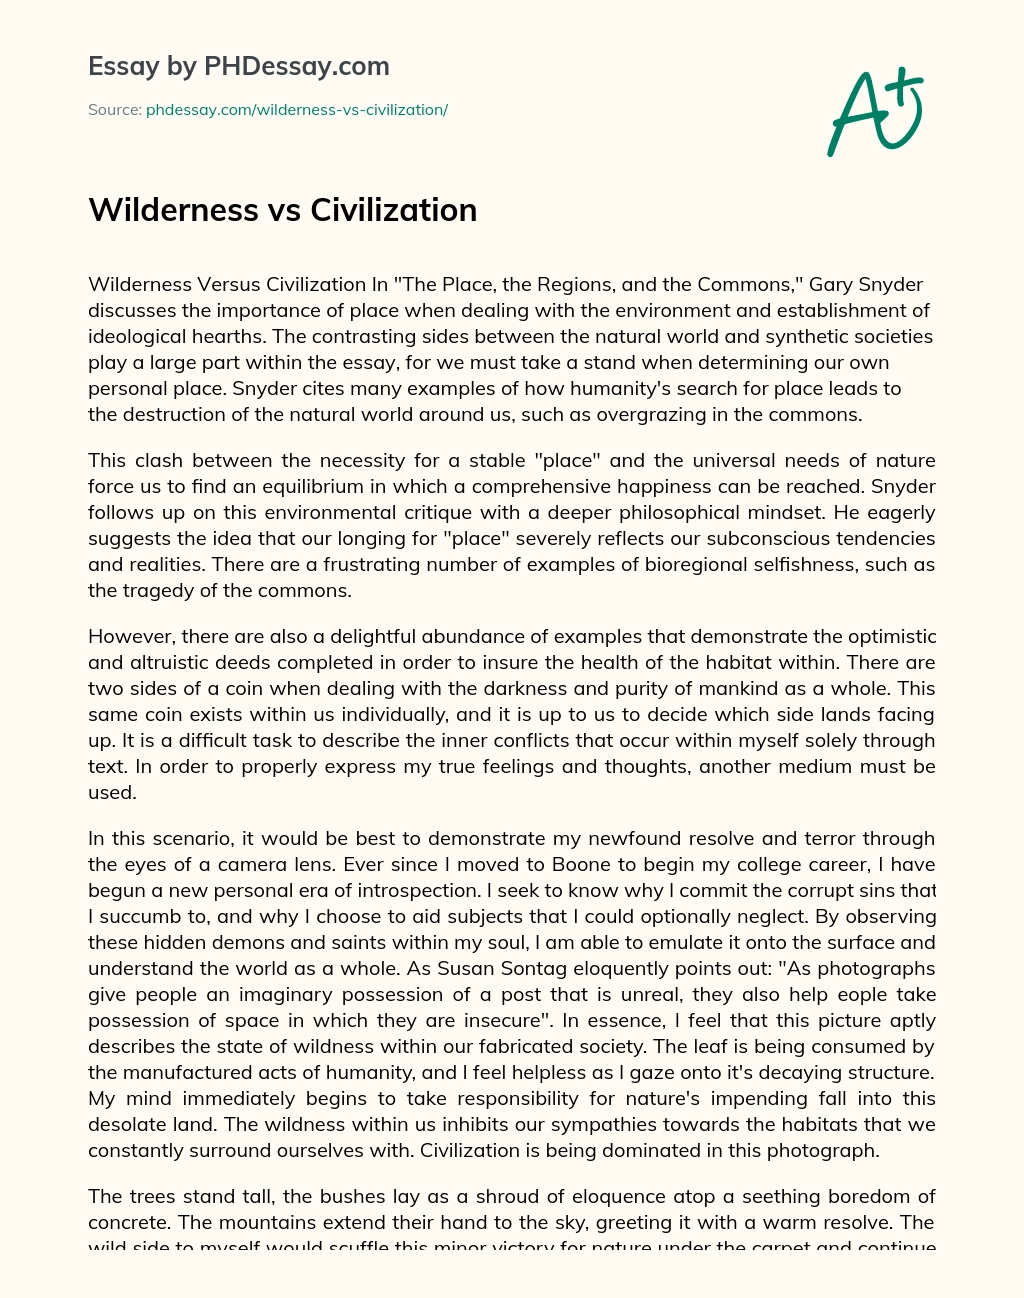 Wilderness vs Civilization essay